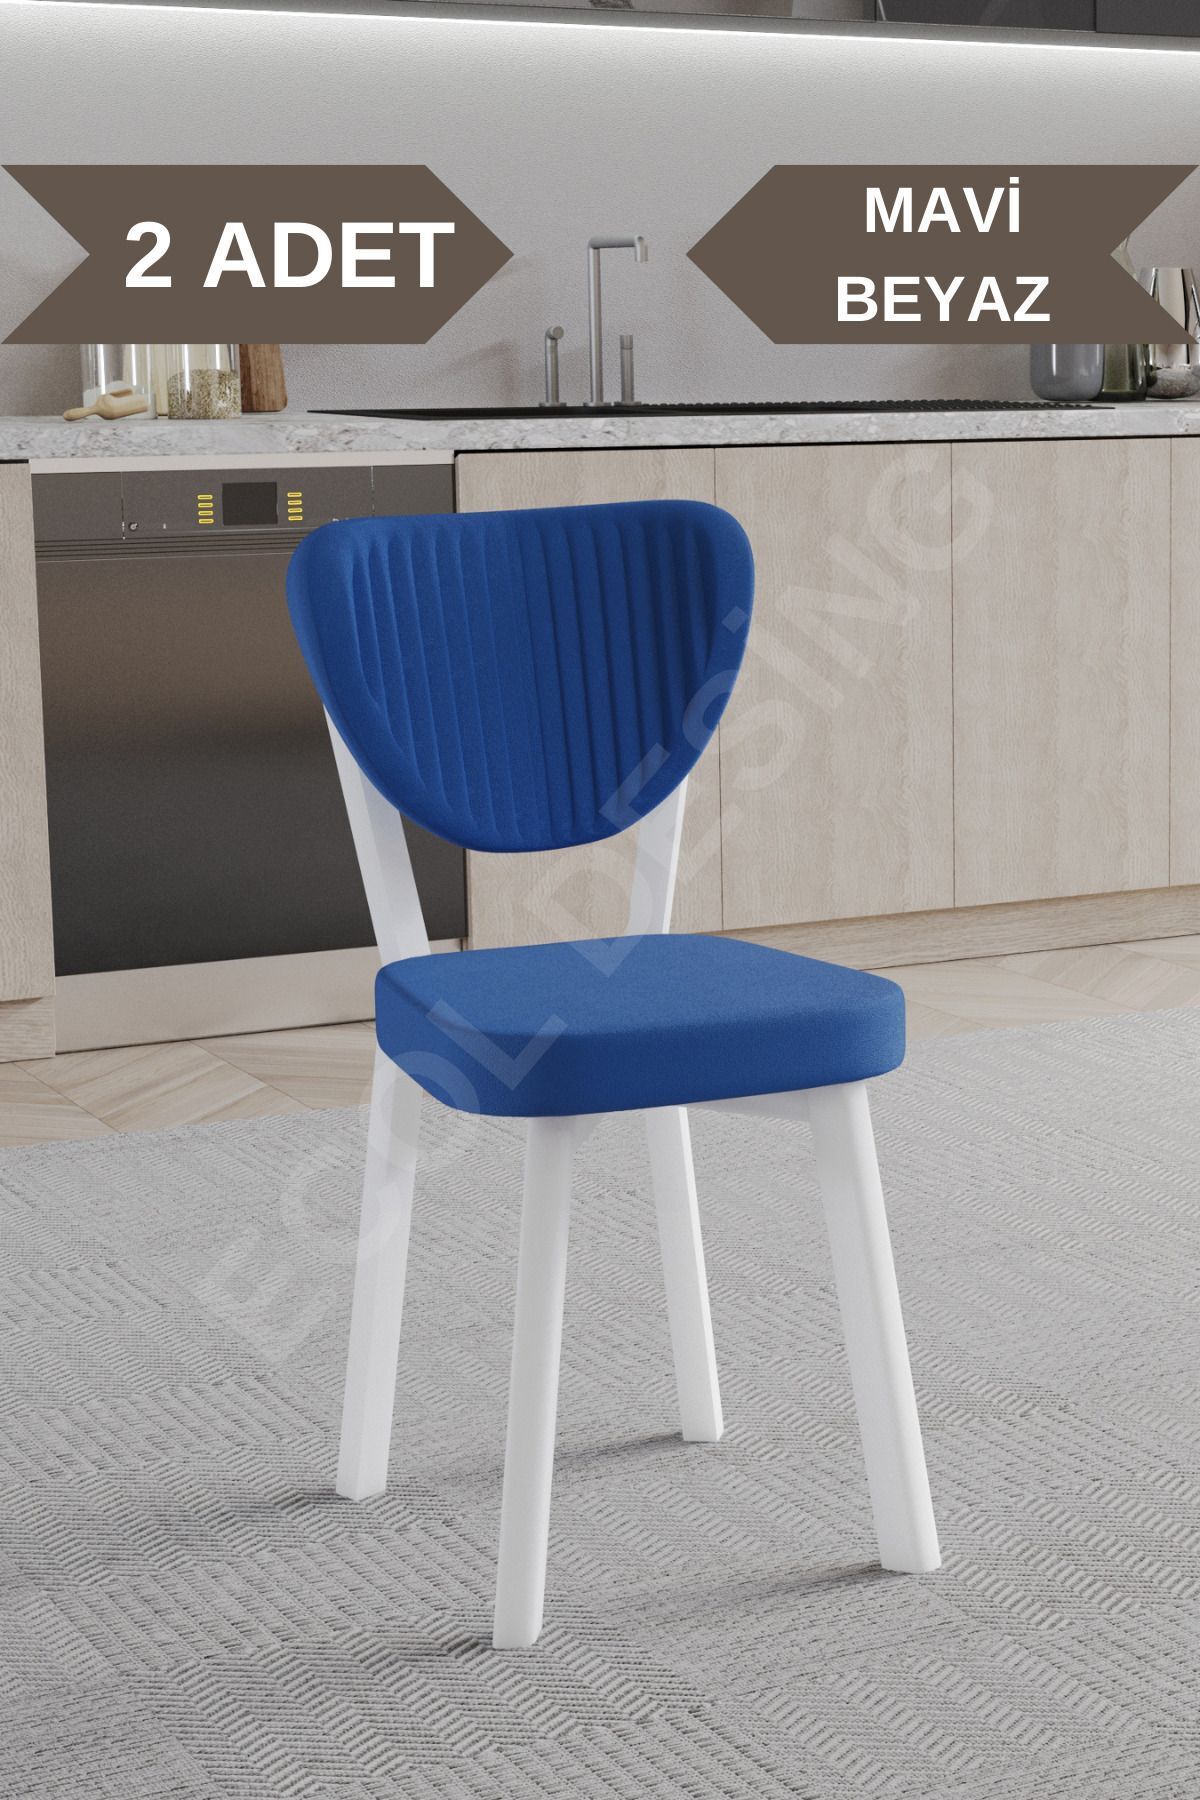 FAYMEND 2 Adet Elma Model Mutfak Sandalyesi Salon Sandalyesi Yemek Sandalyesi Cafe Restaurant Sandalyesi